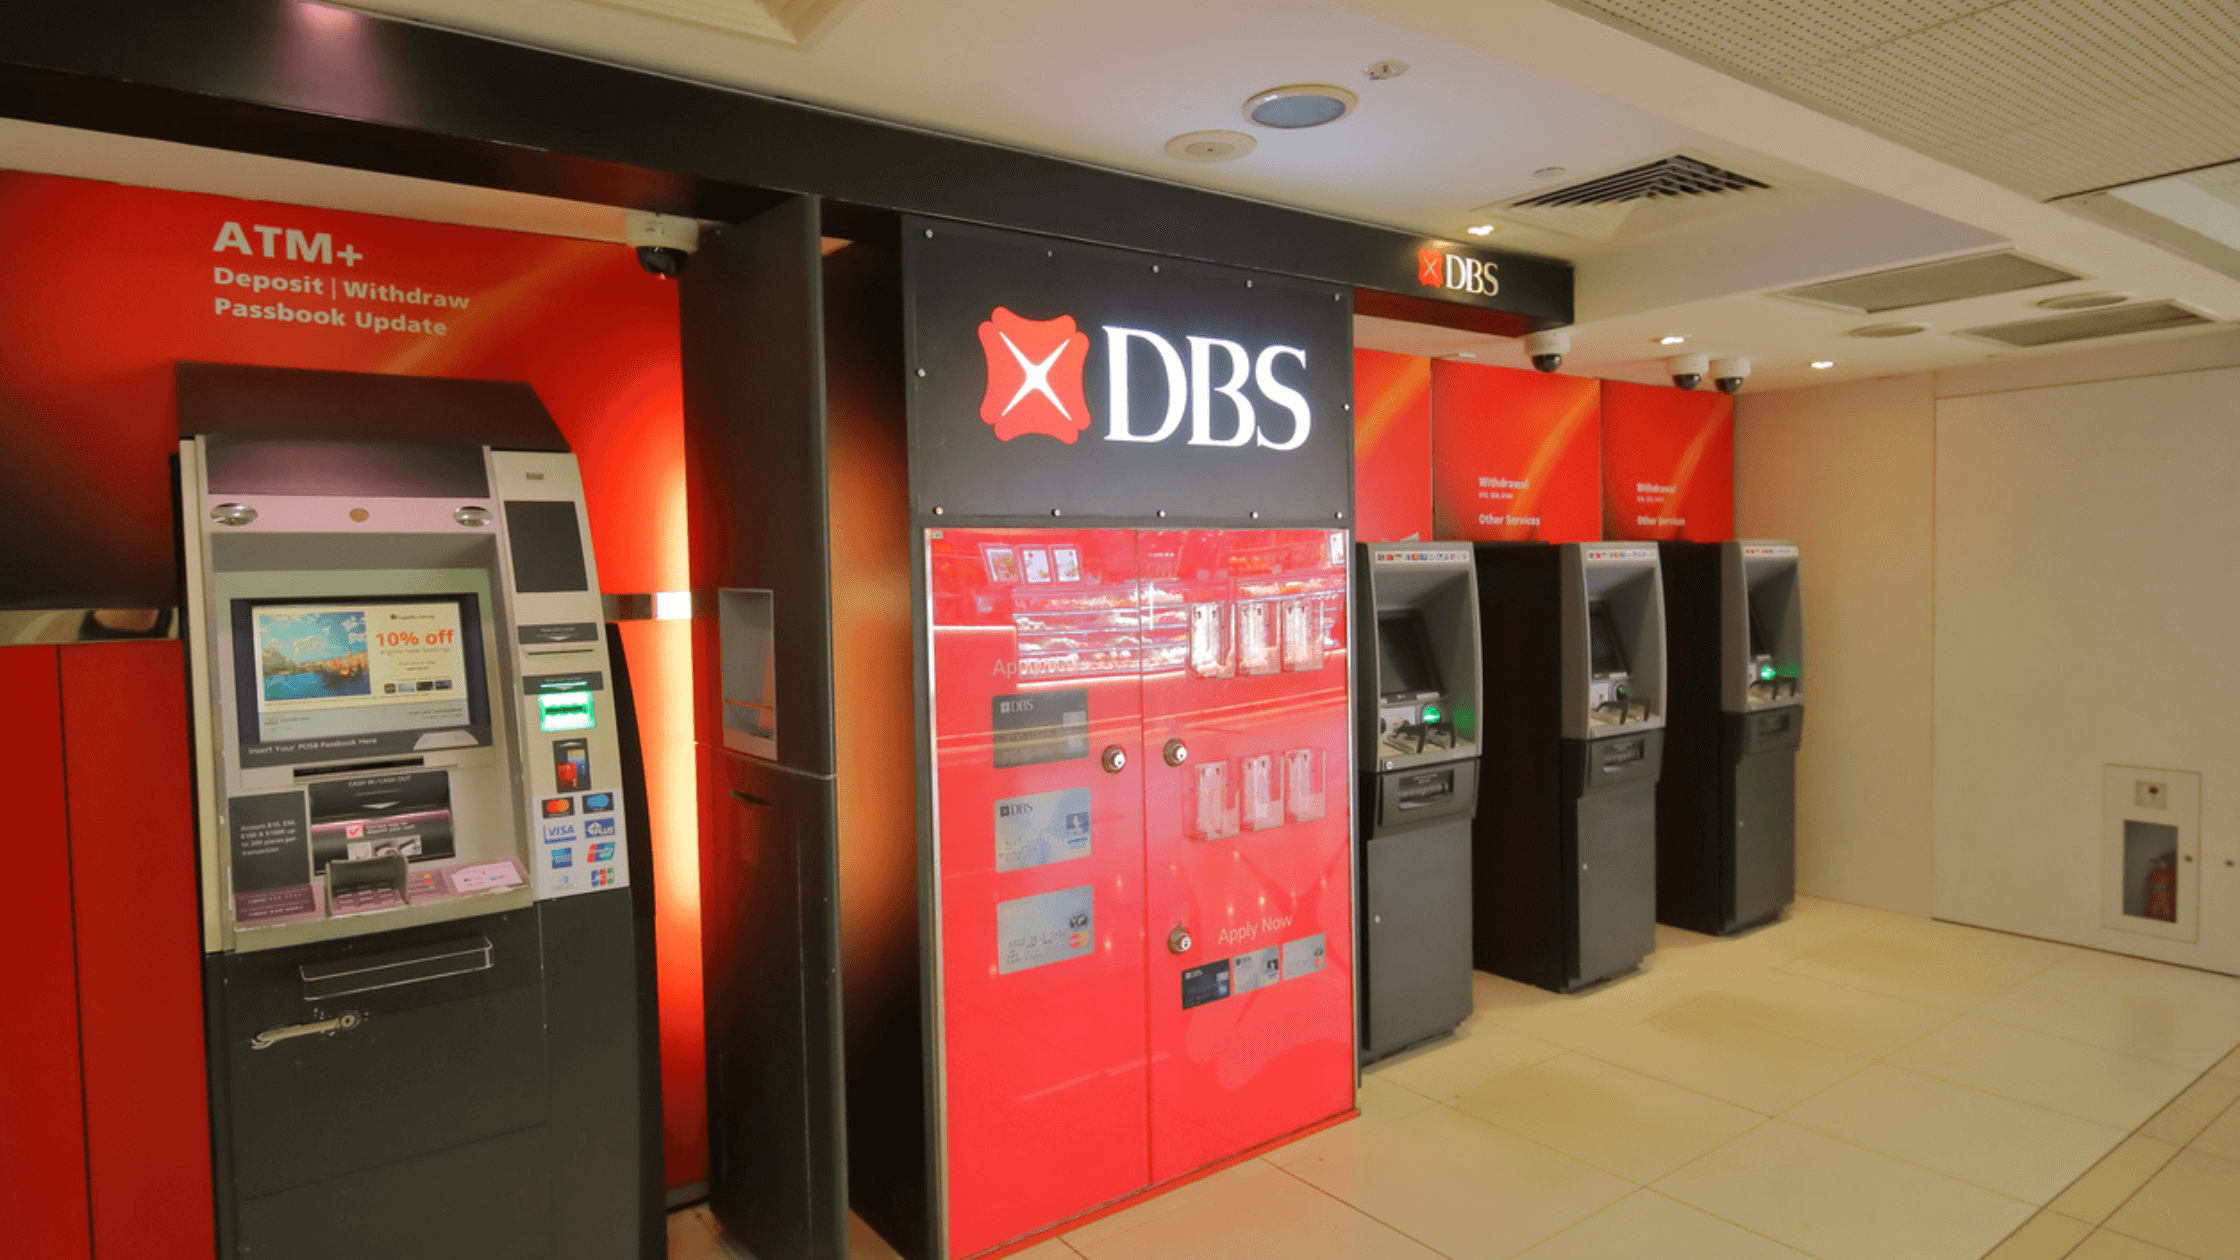 DBS shares dividend